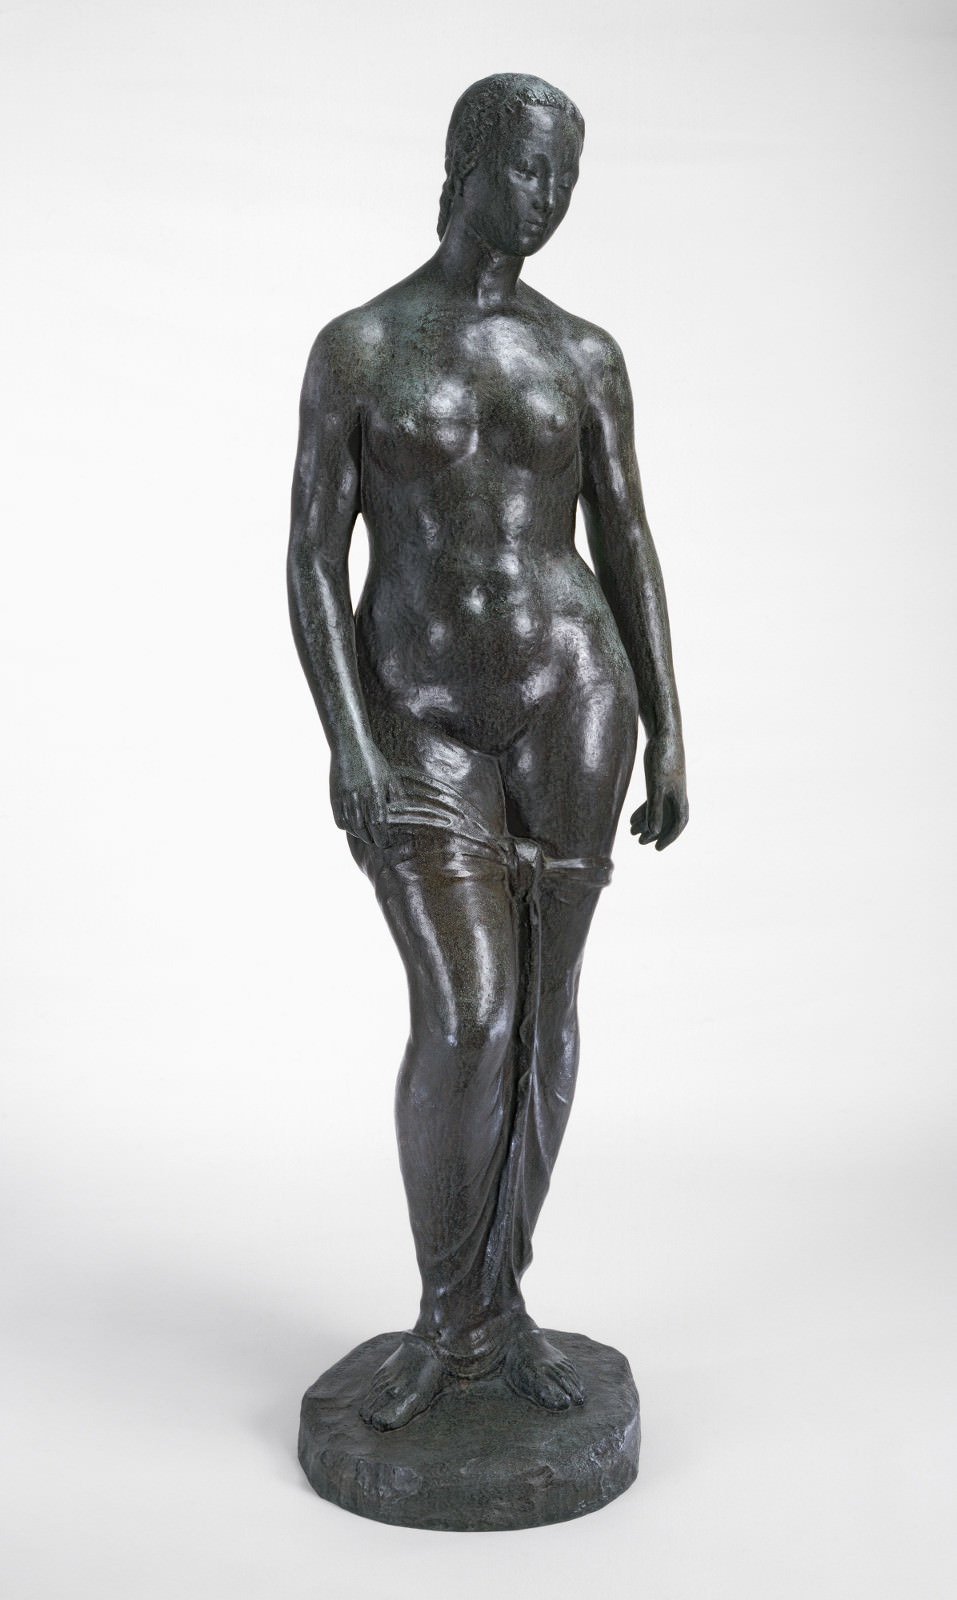 Feige. 3 - Man Standing, Wilhelm Lehmbruck, 1910, Bronze, 191.2 x 54 x 39.9 cm. National Gallery of Art, Washington. Ailsa Mellon Bruce Fund.